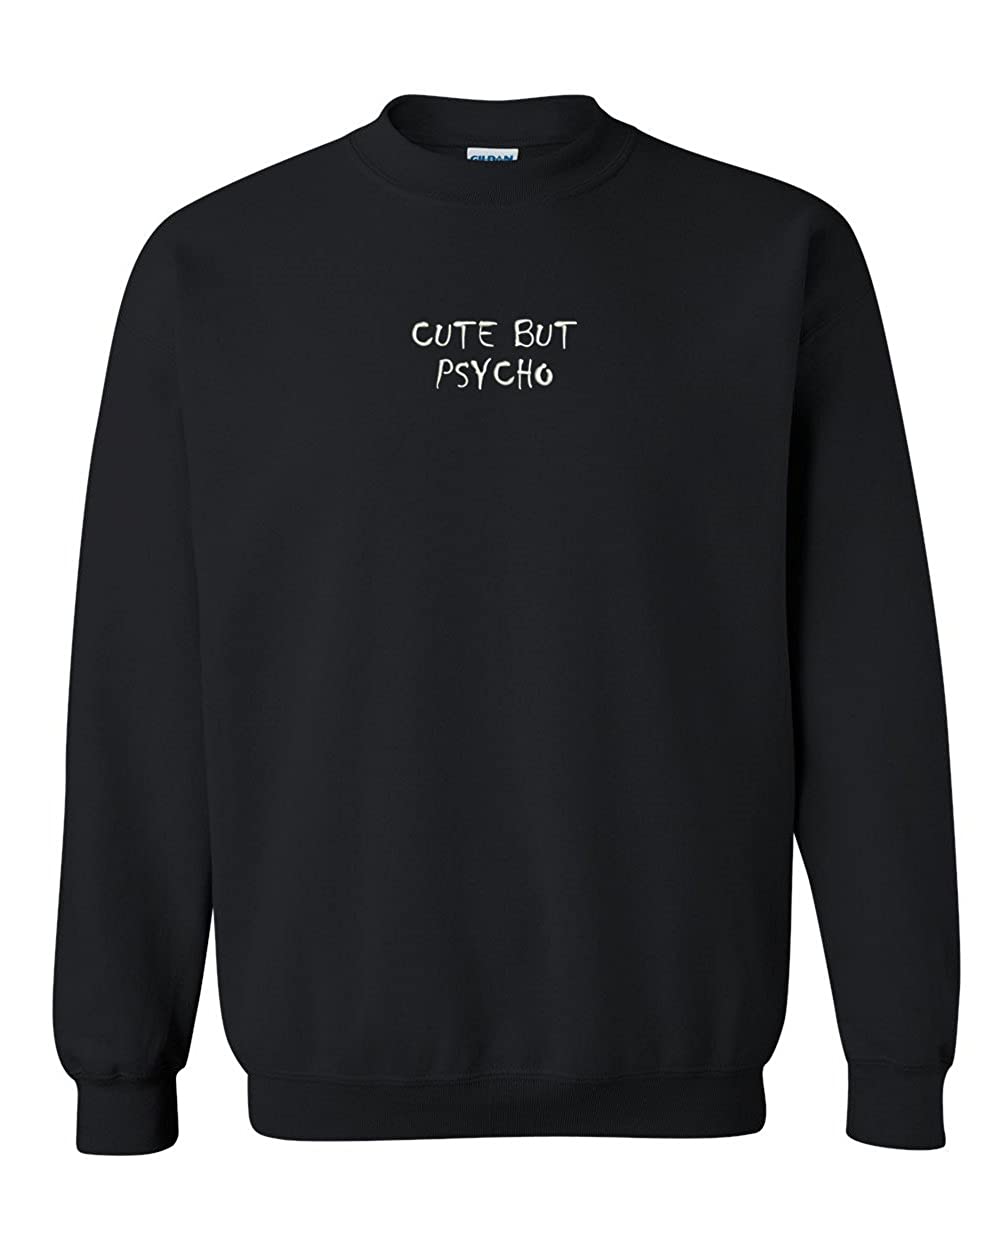 Trendy Apparel Shop Cute But Psycho Embroidered Crewneck Sweatshirt